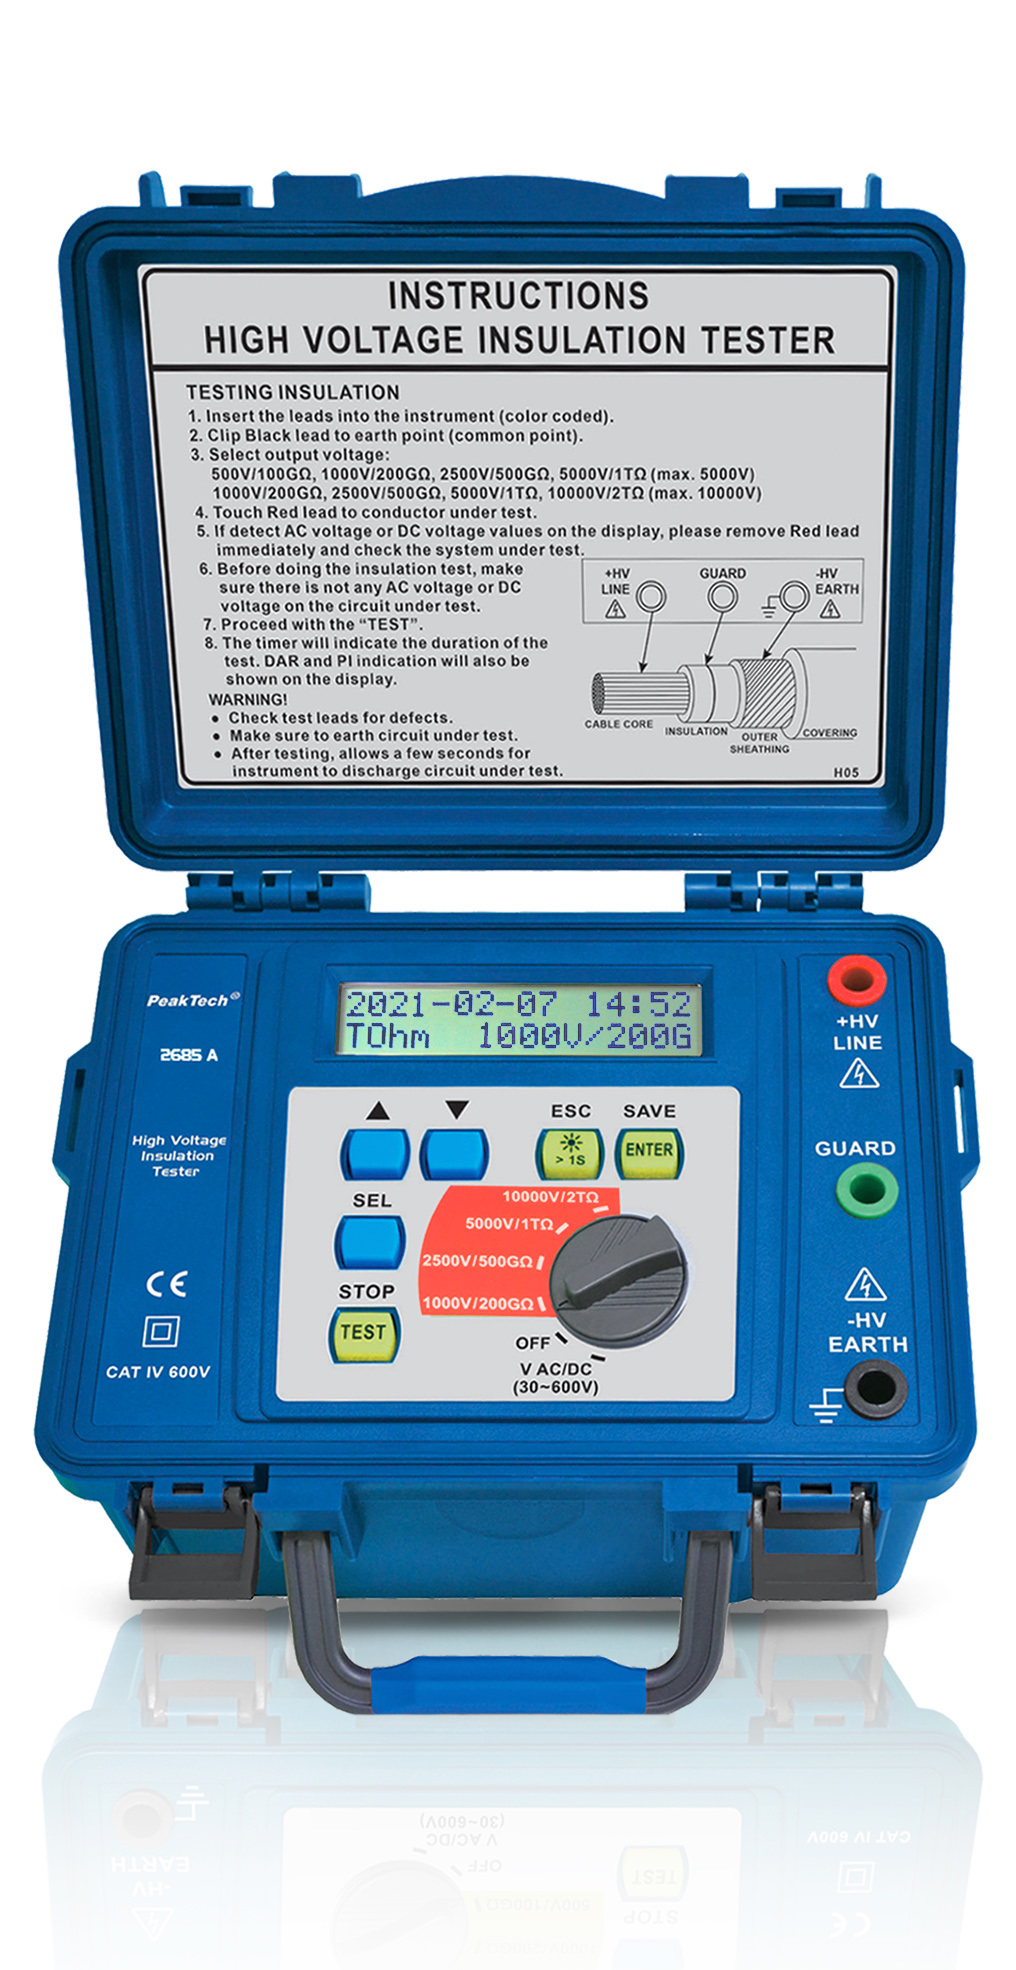 «PeakTech® P 2685 A» Insulation measuring device 1000 V ... 10 kV/2TΩ